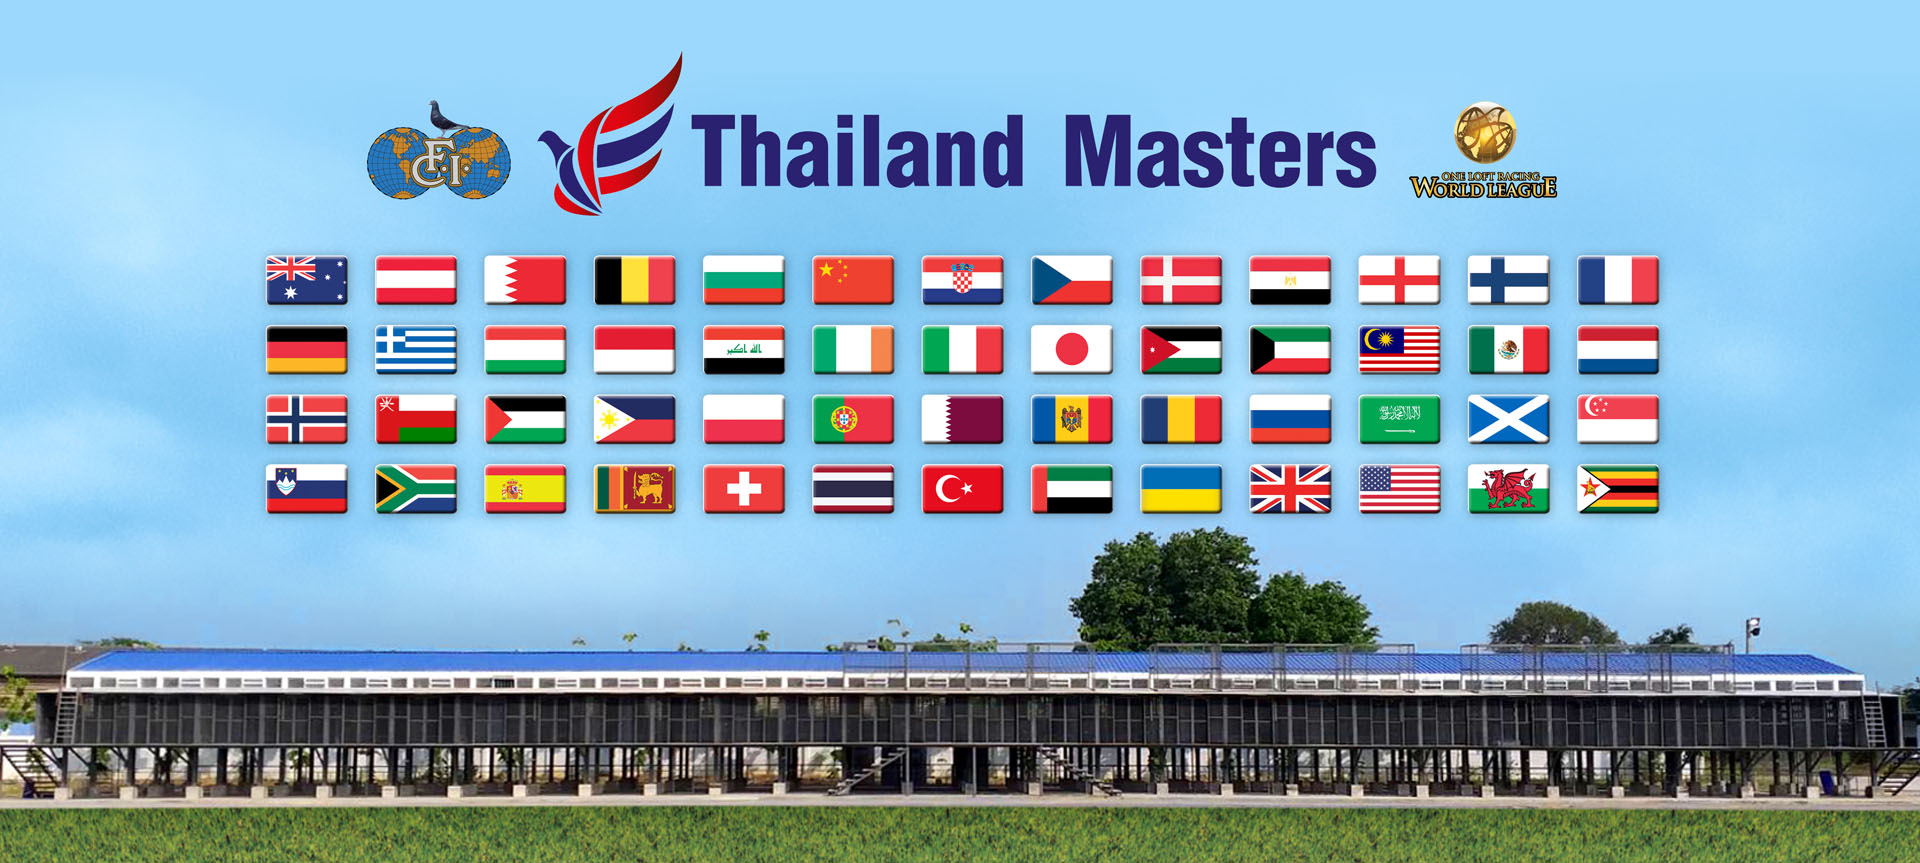 Thailand Masters Loft